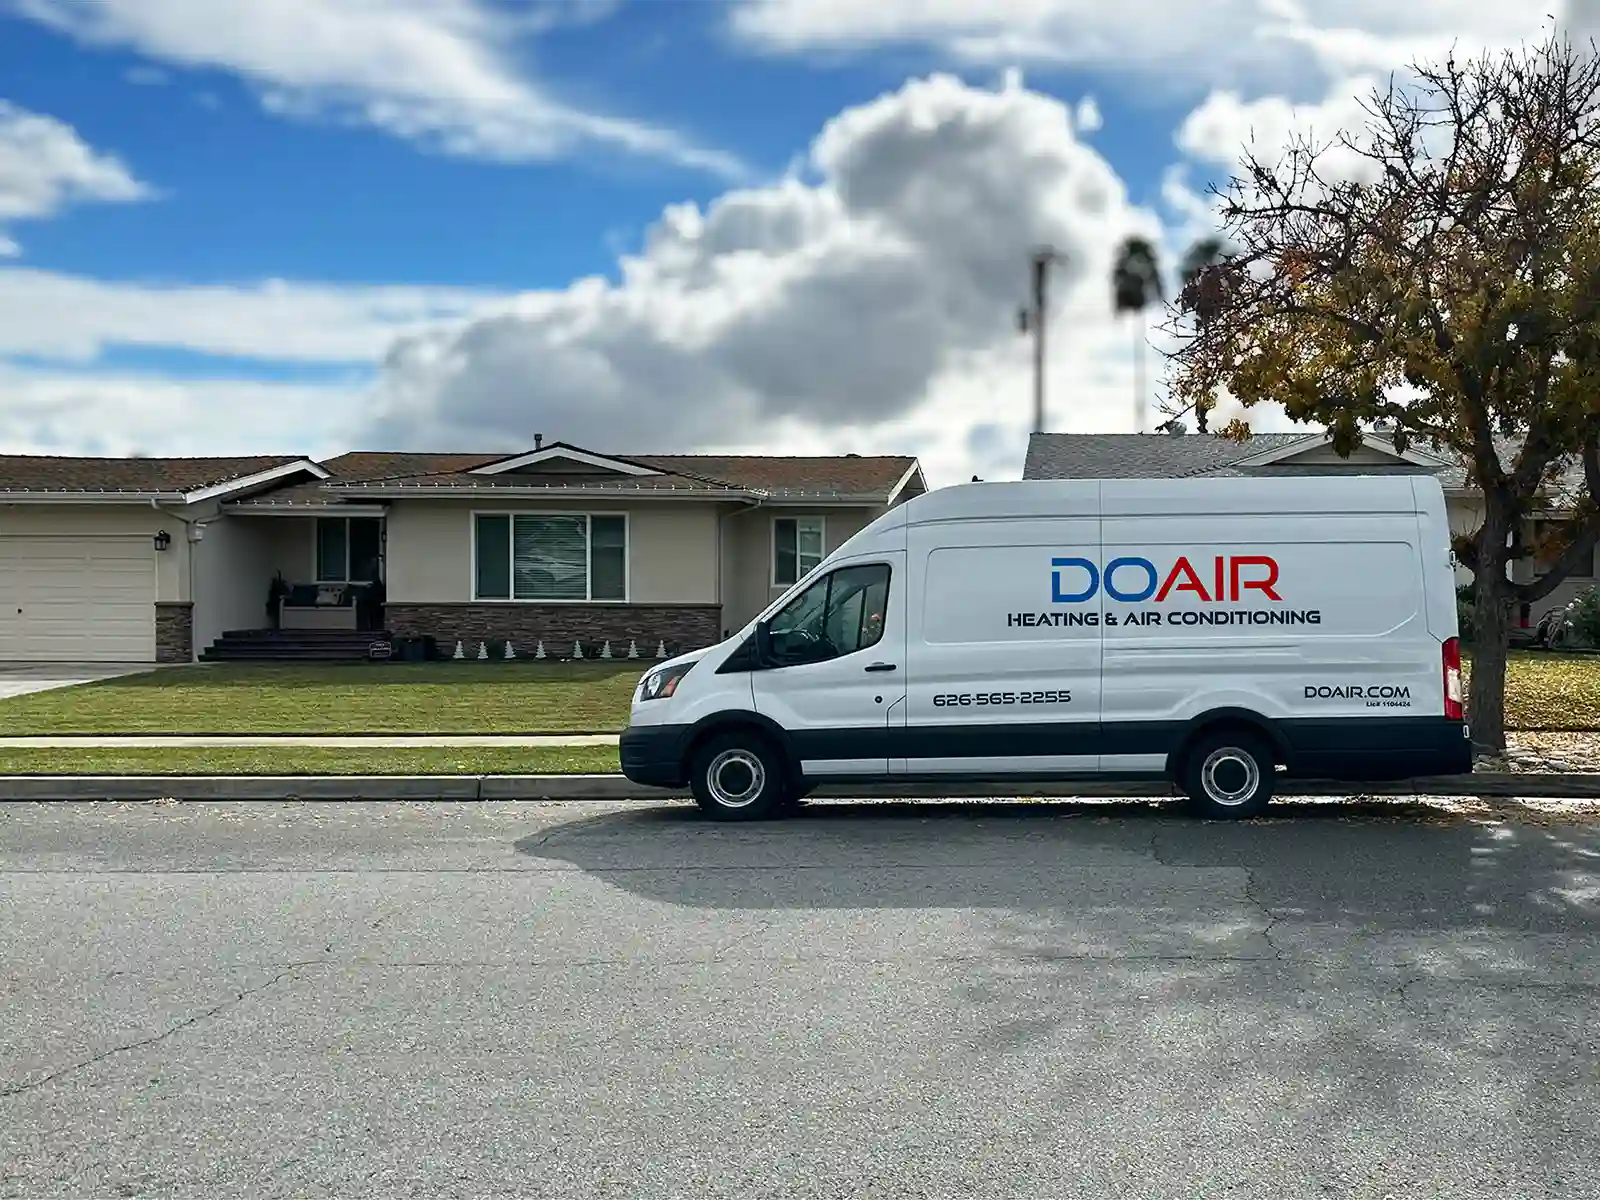 DOAIR Inc. HVAC service work-van parked at a Southern California job site.